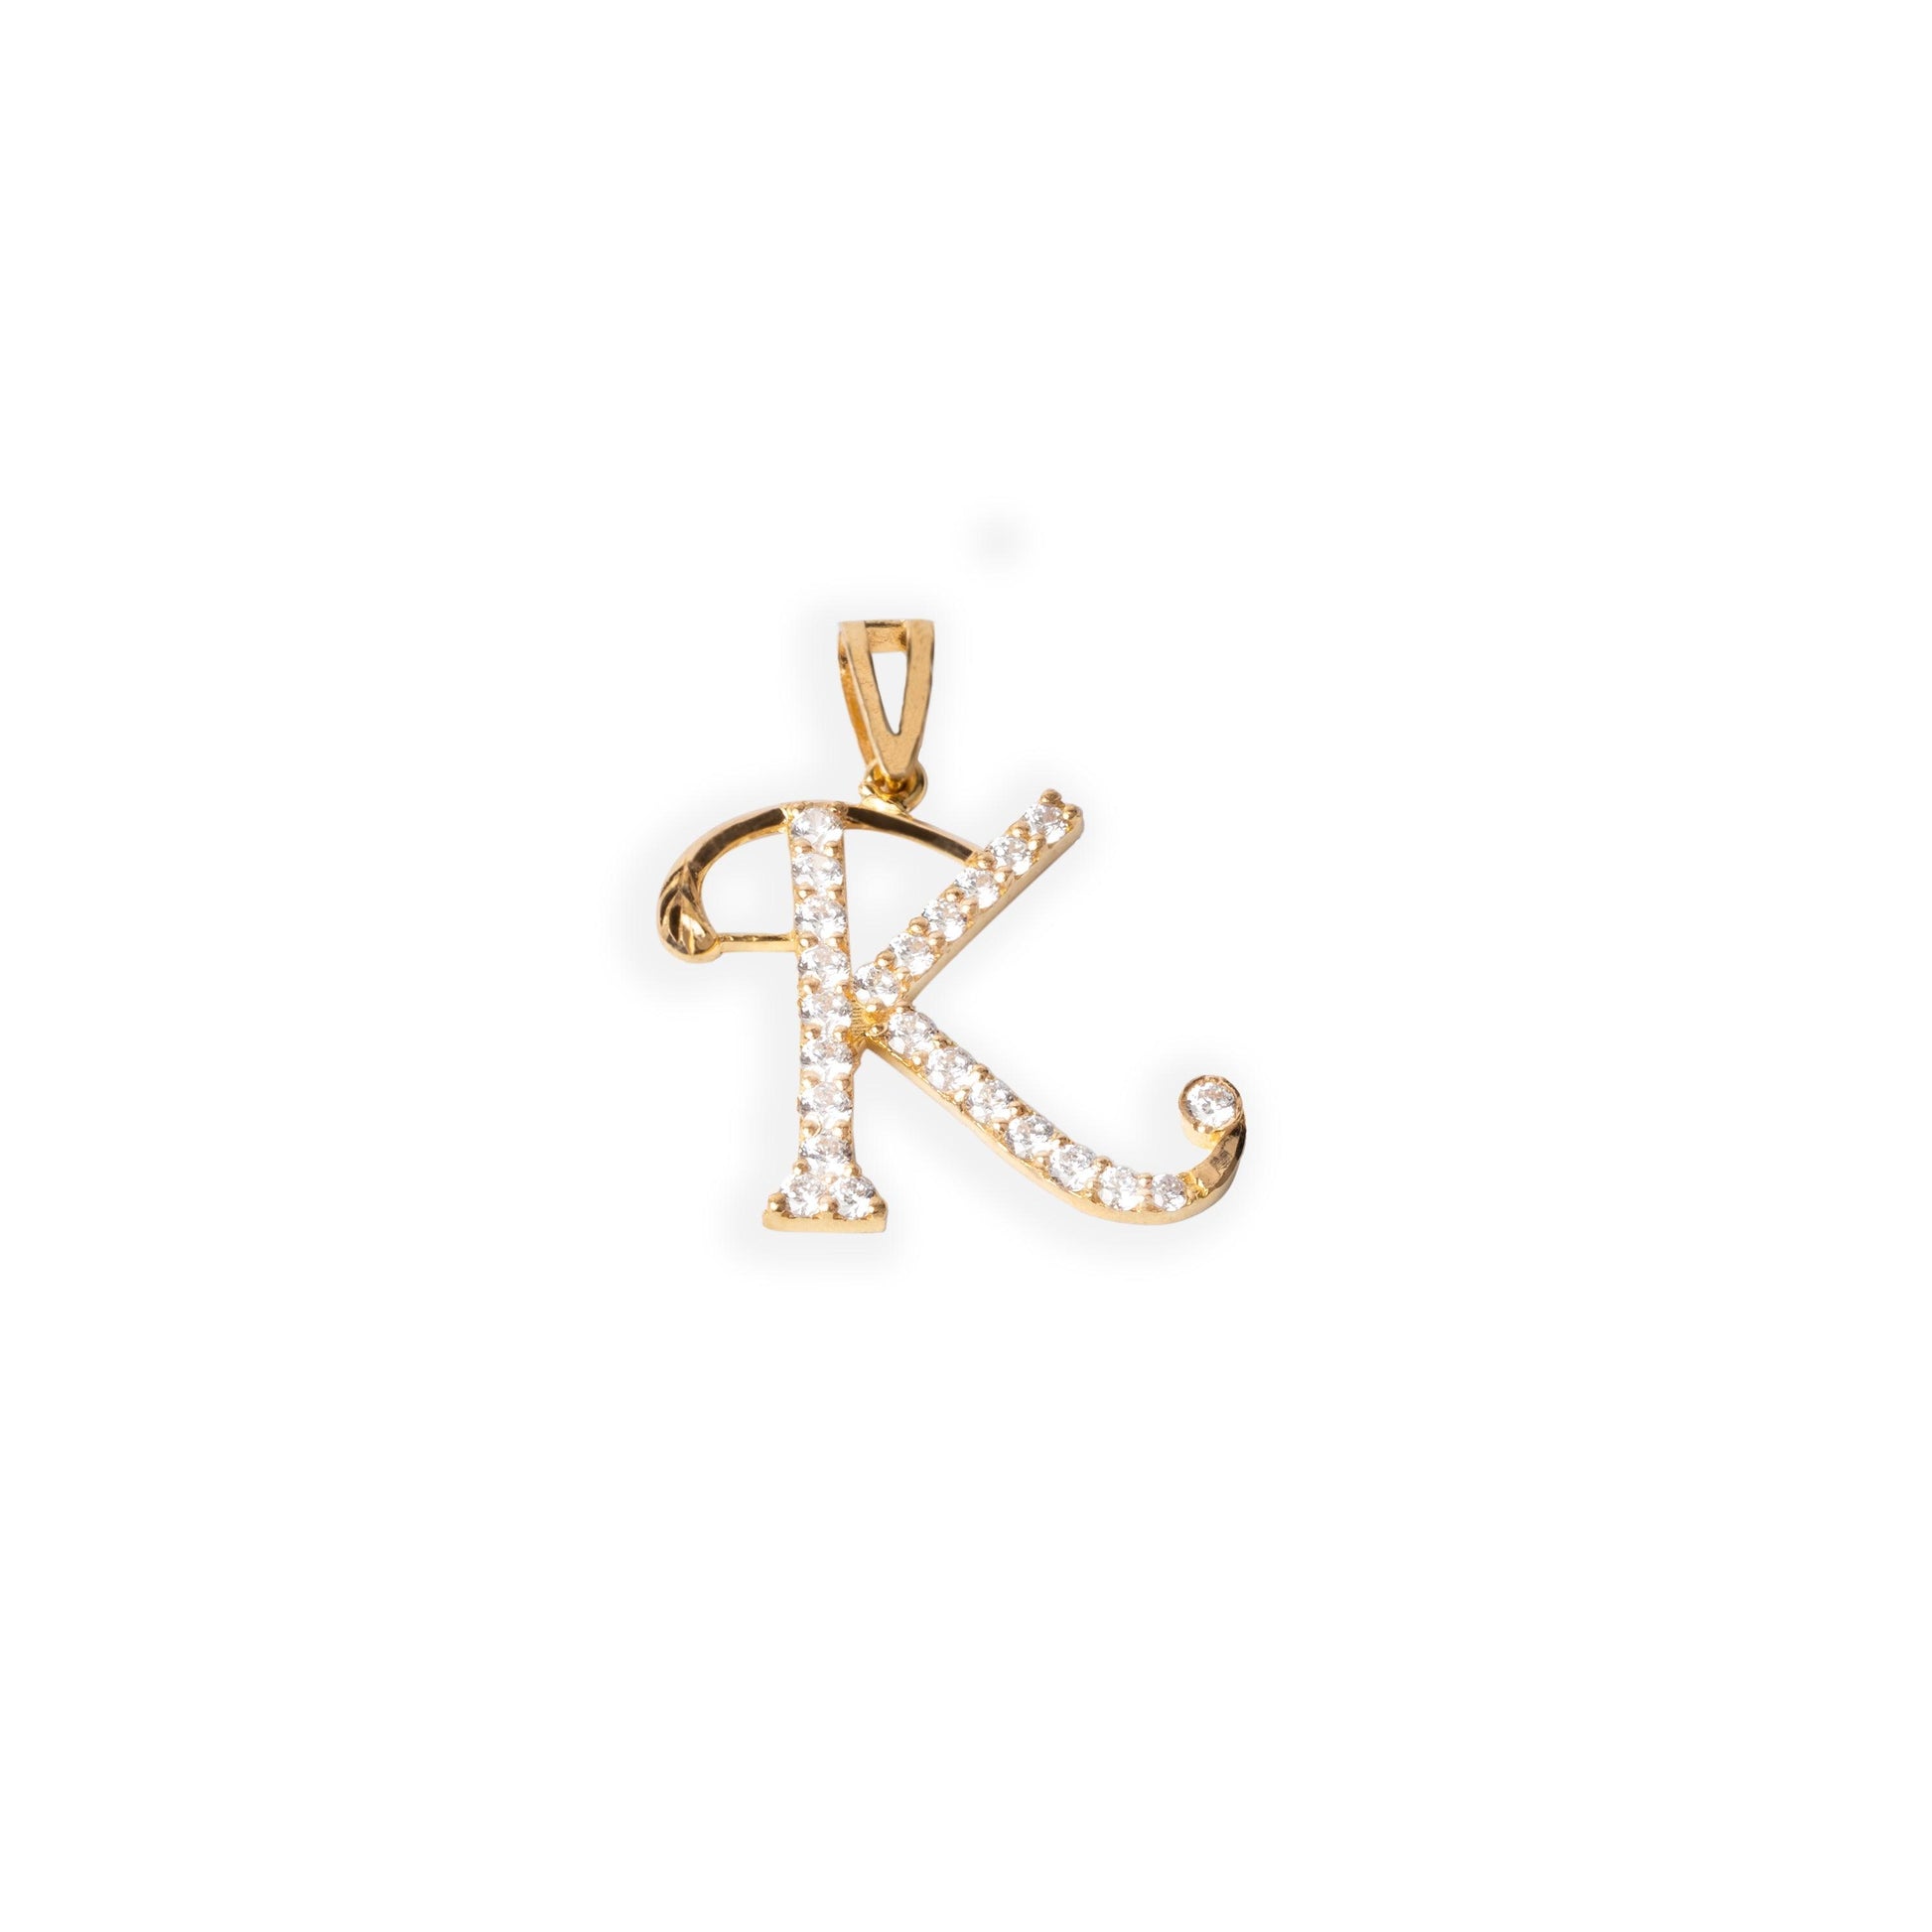 'K' 22ct Gold Initial Pendant with Cubic Zirconia Stones P-7039-K - Minar Jewellers